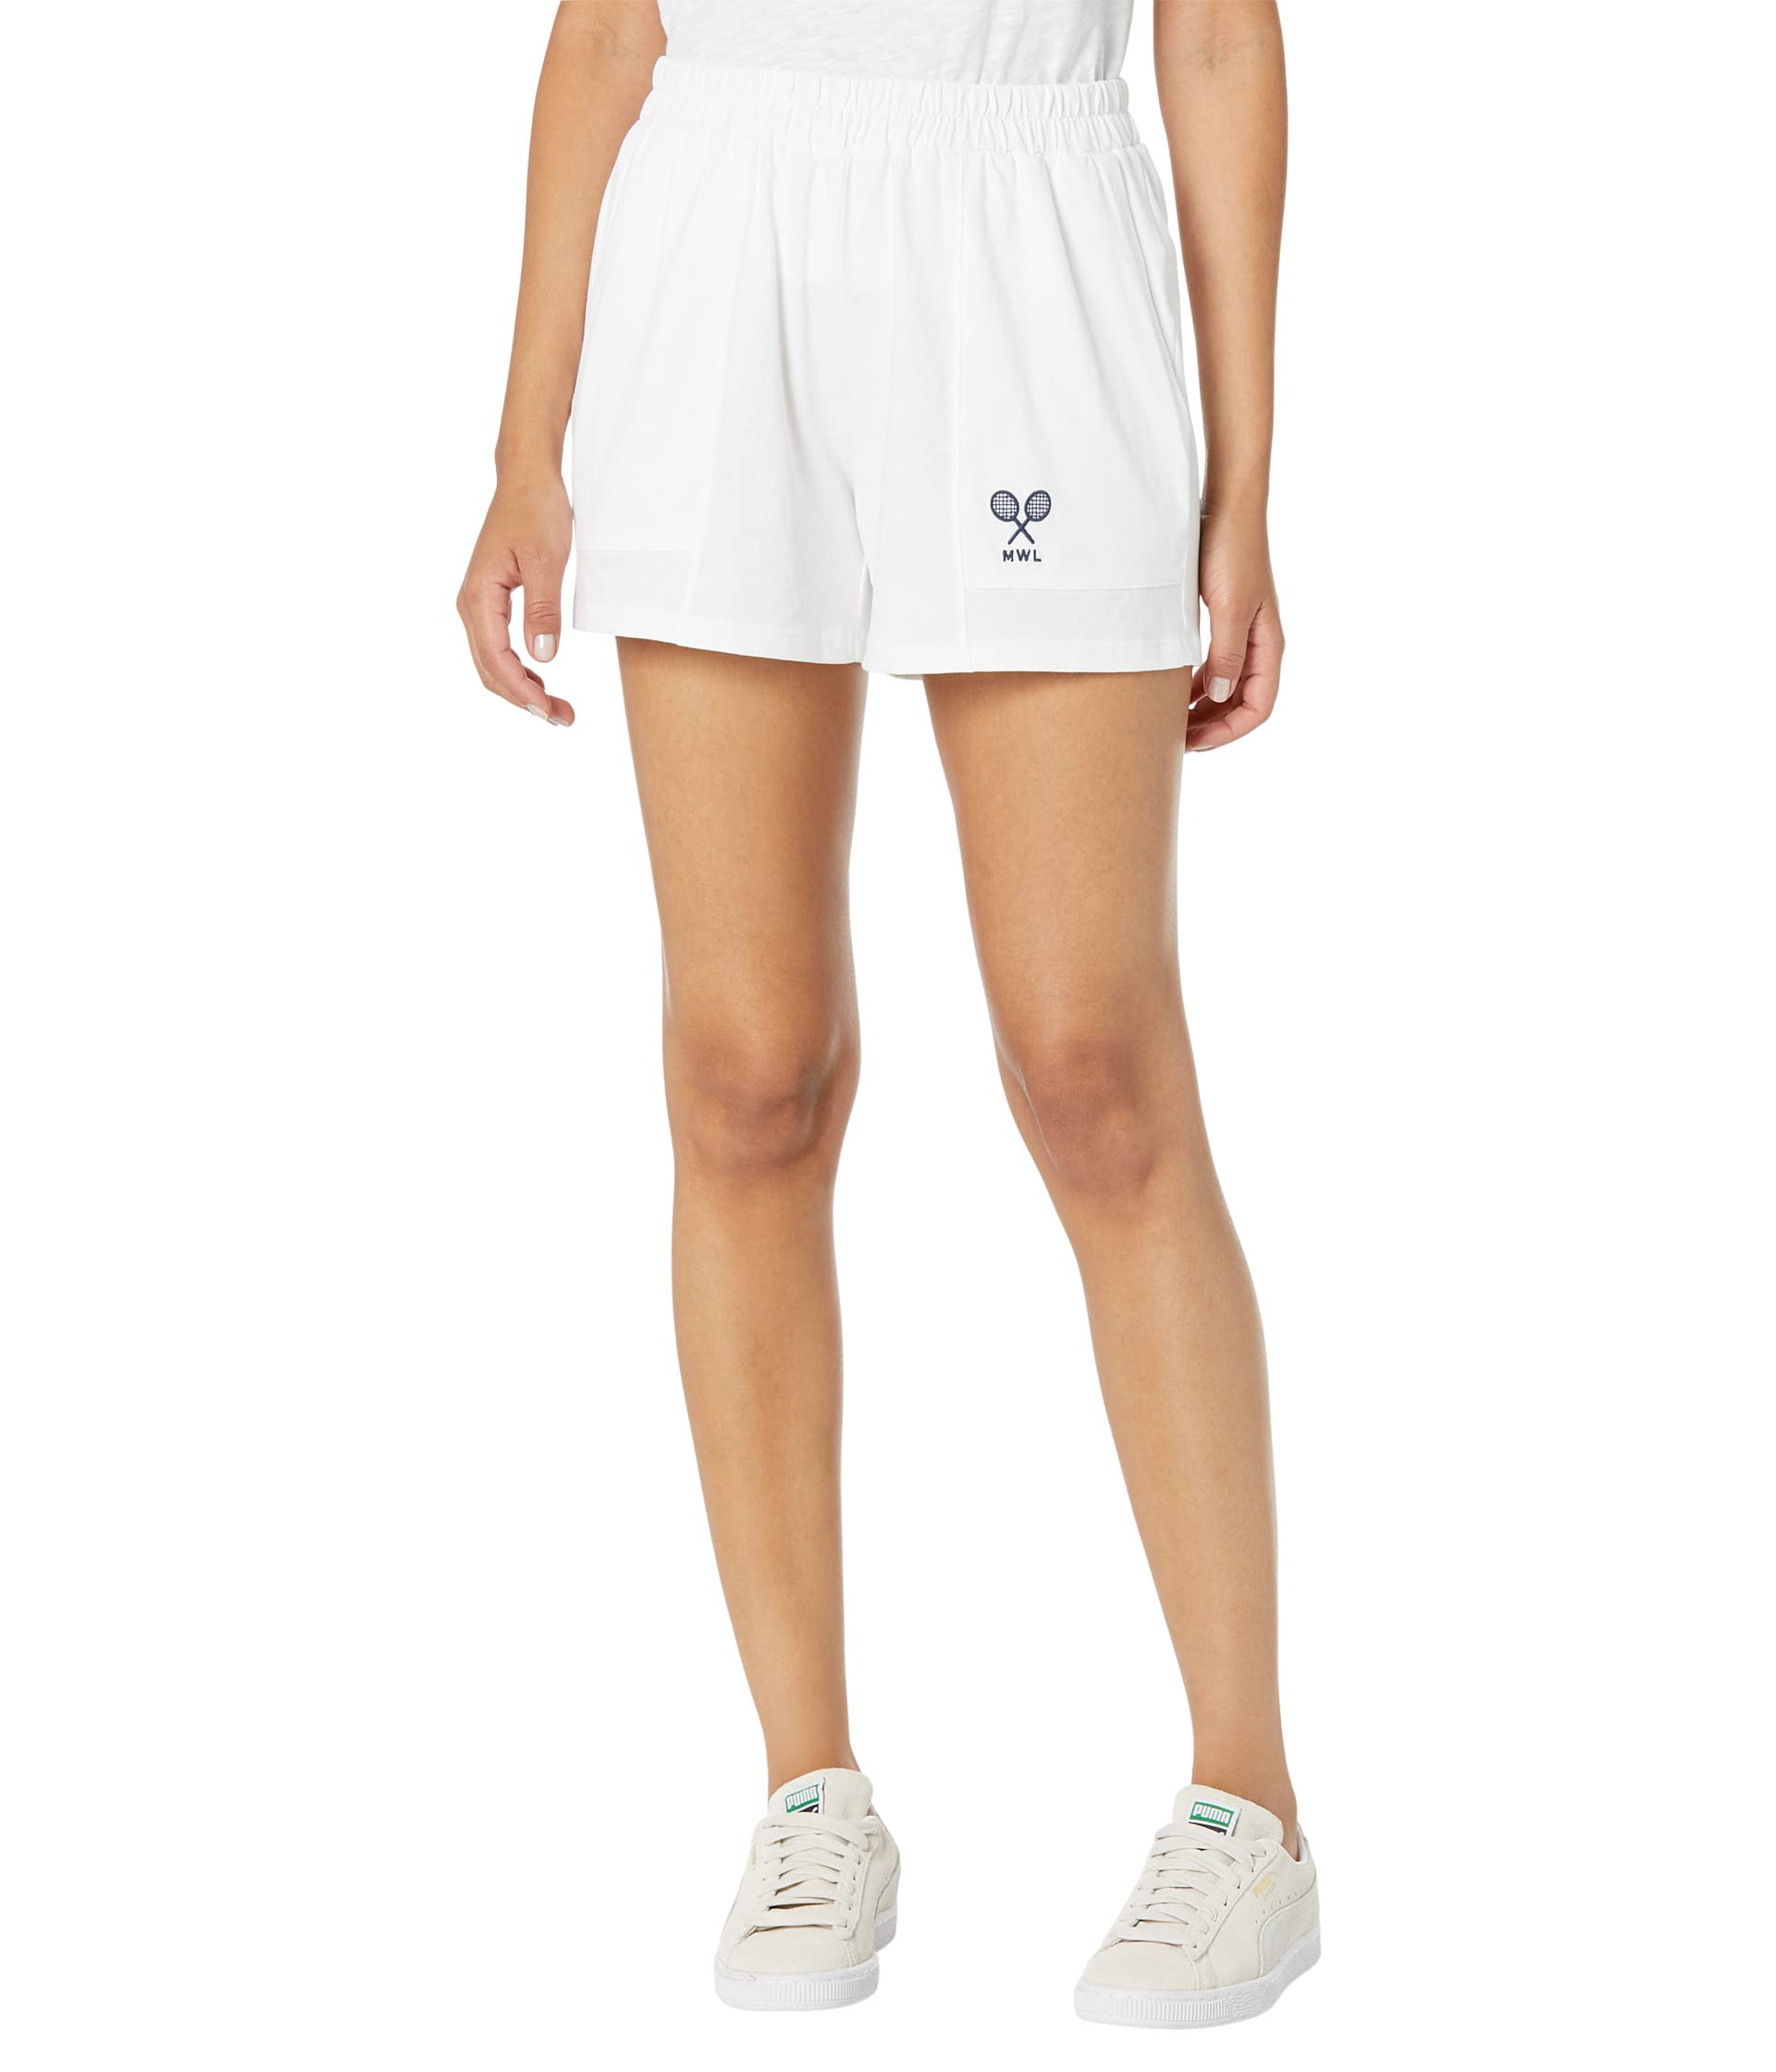 Шорты Madewell, MWL Embroidered Tennis Pull-On Seamed Shorts